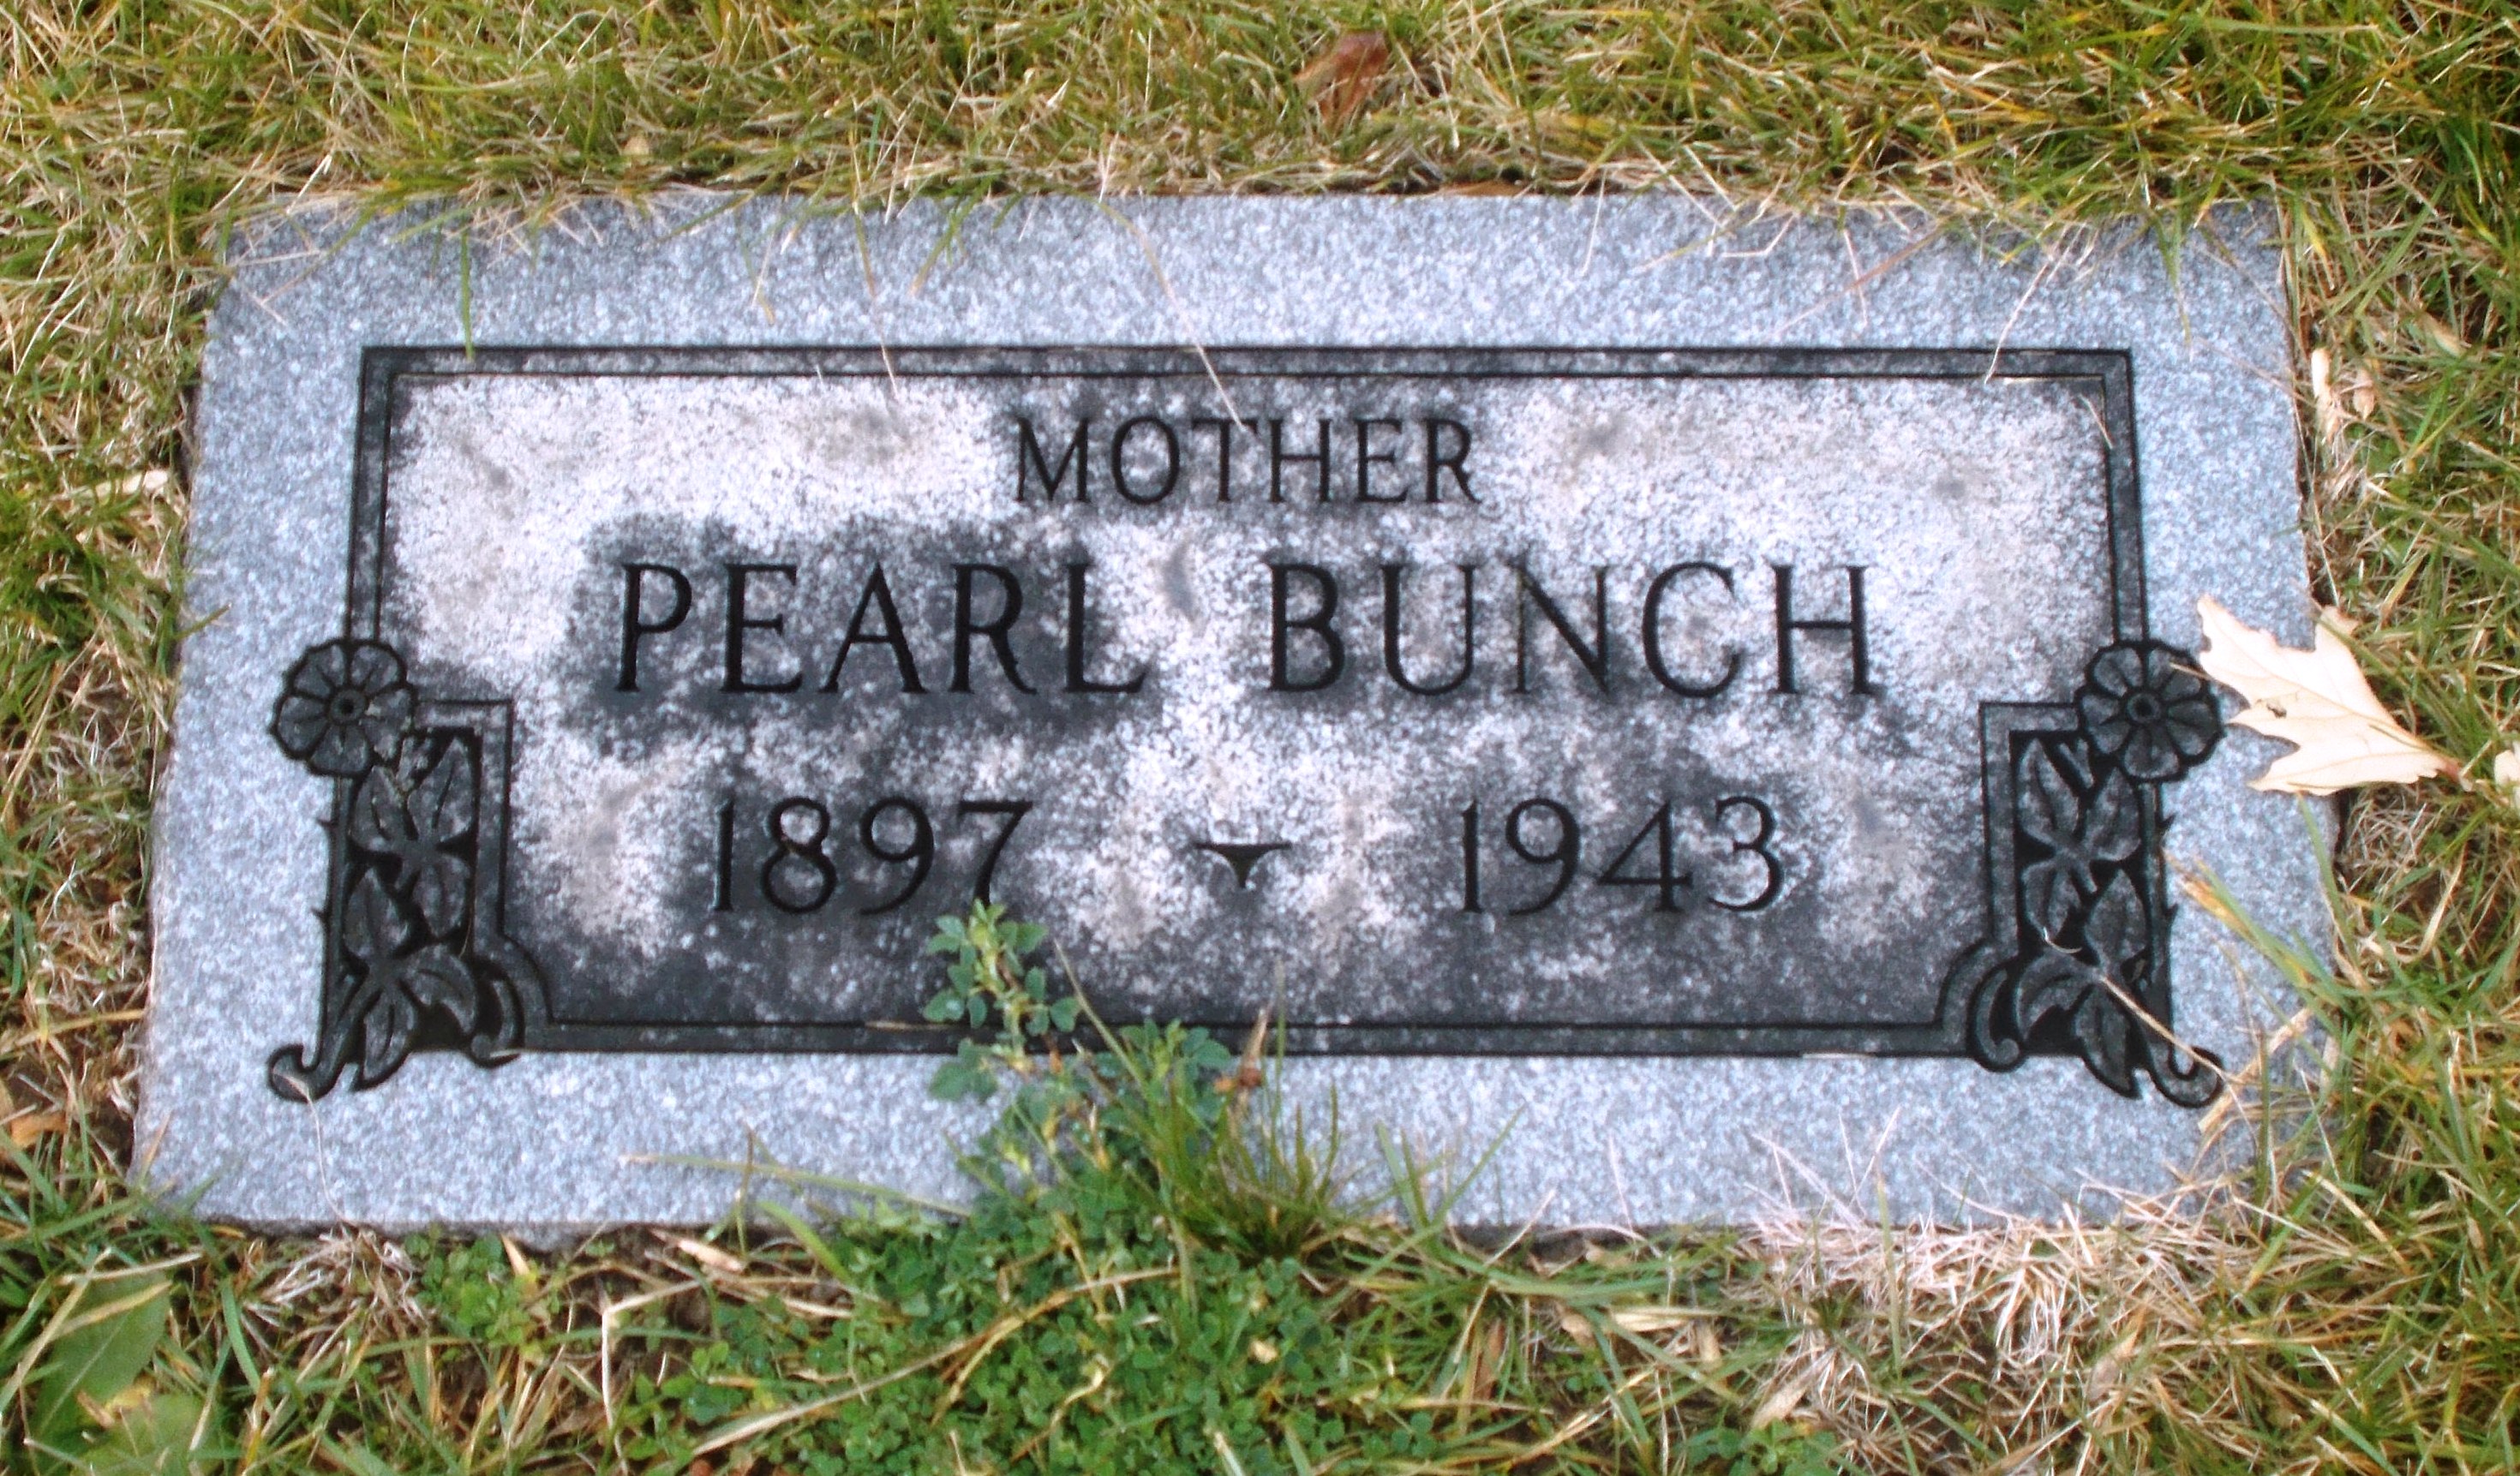 Pearl Bunch